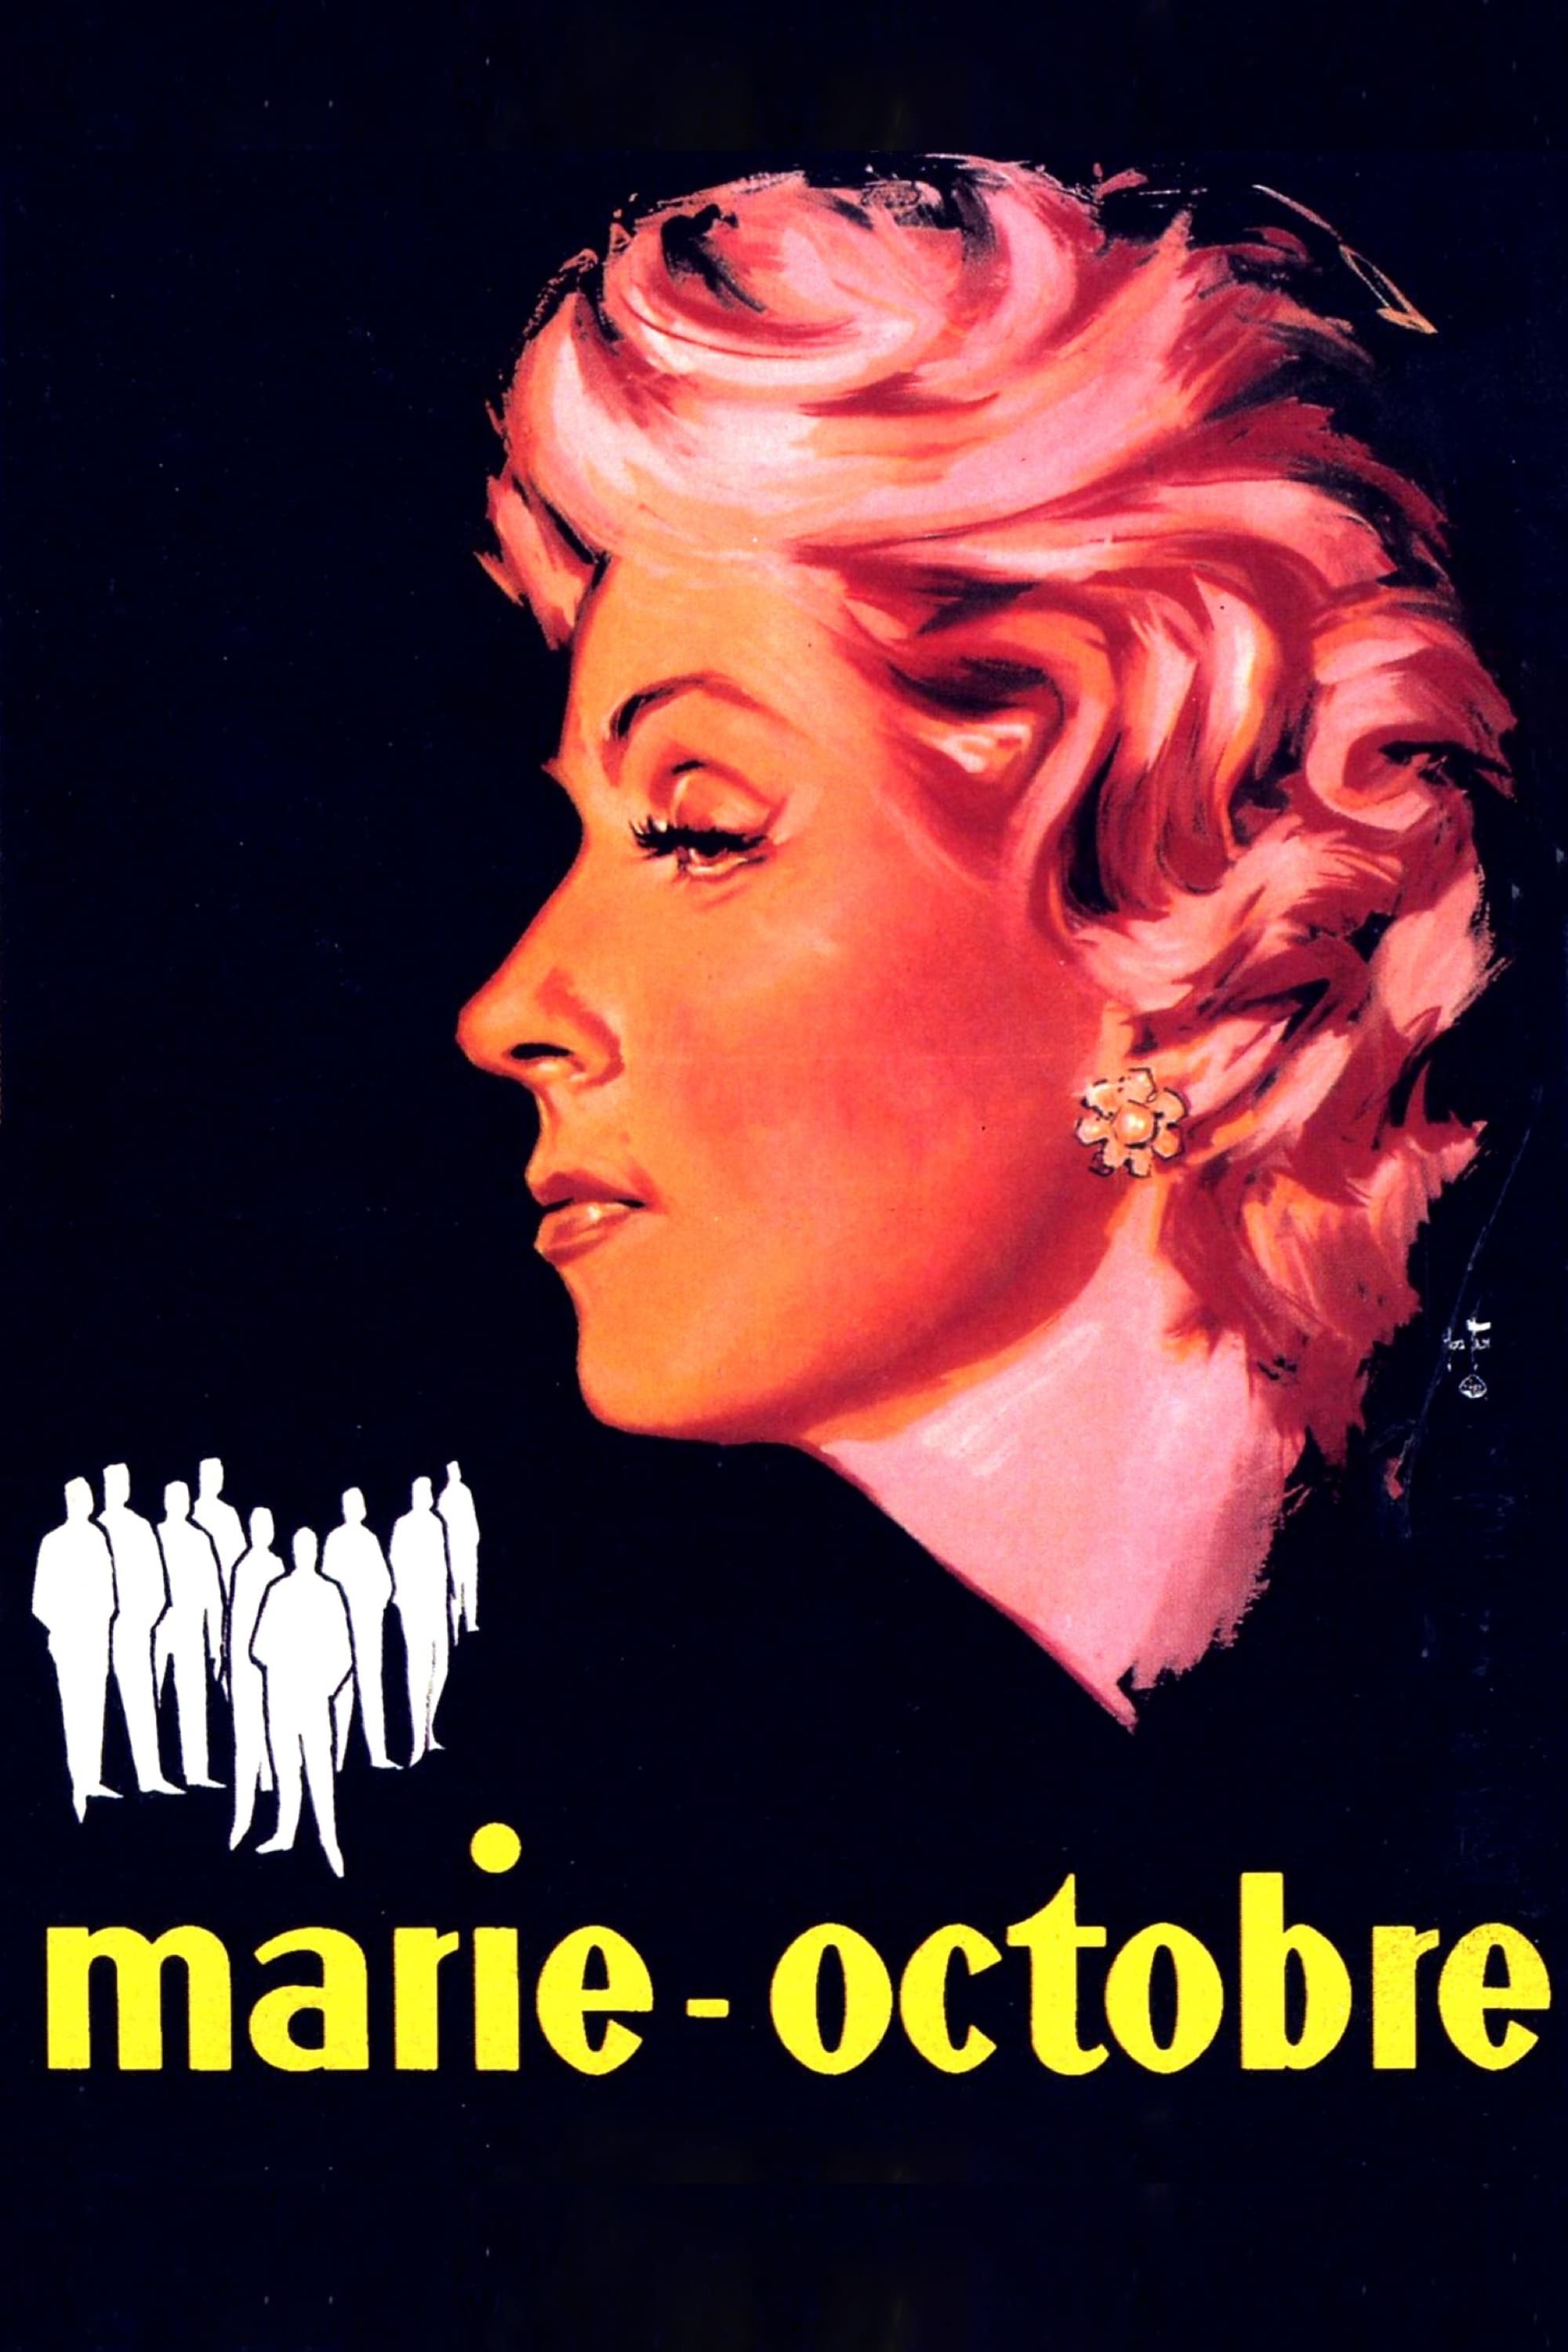 Marie-Octobre (1959)